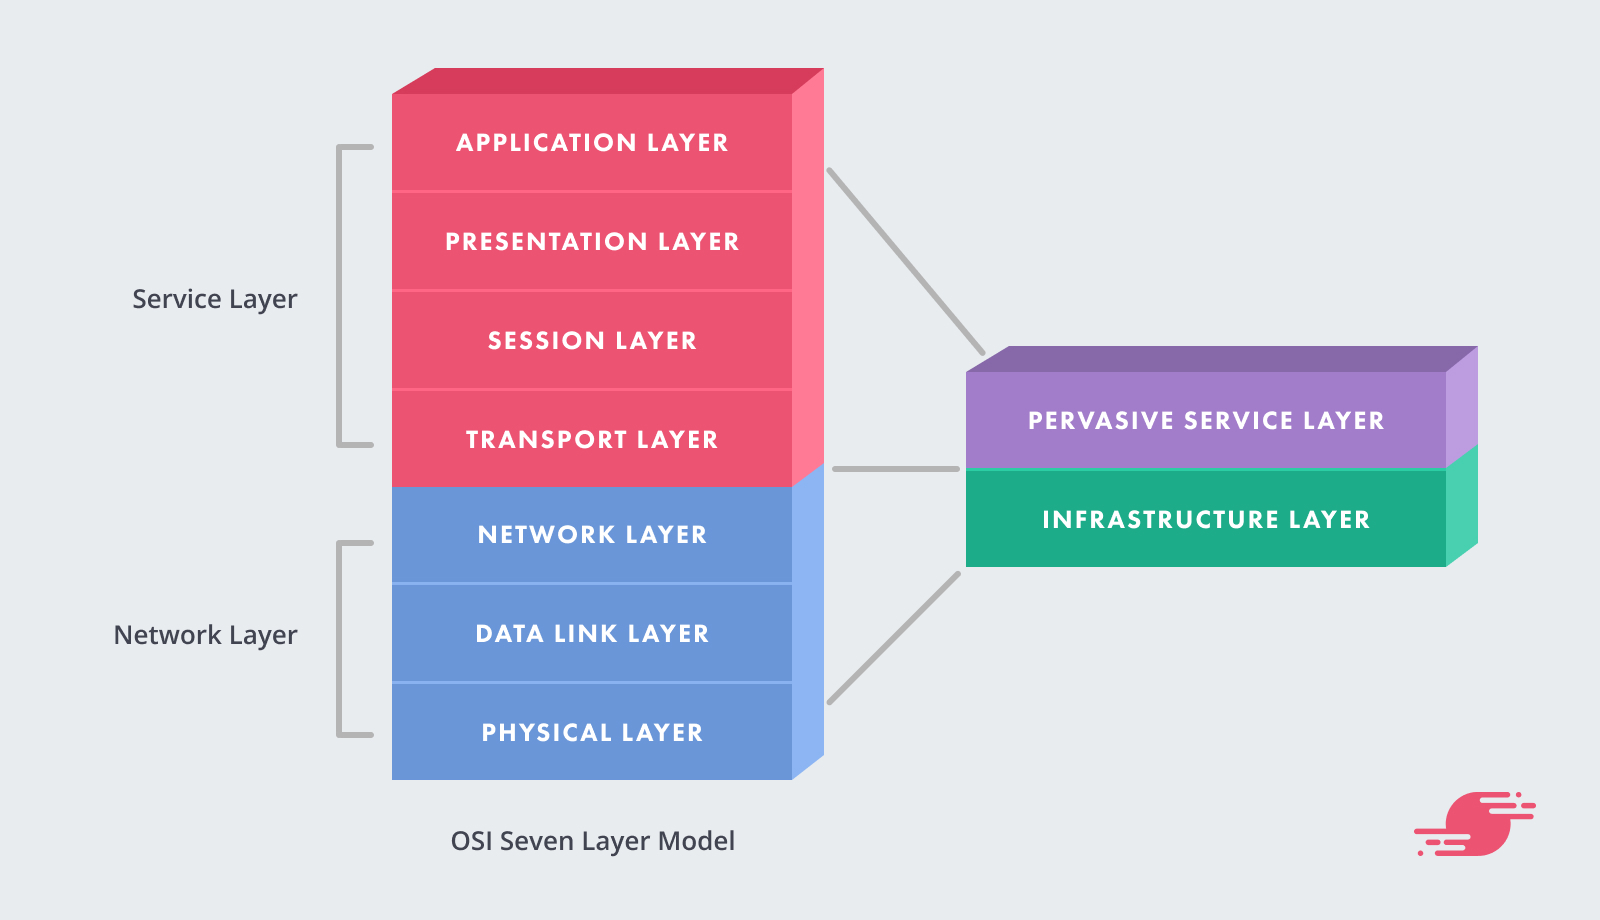 The OSI Sever Layer Model. 